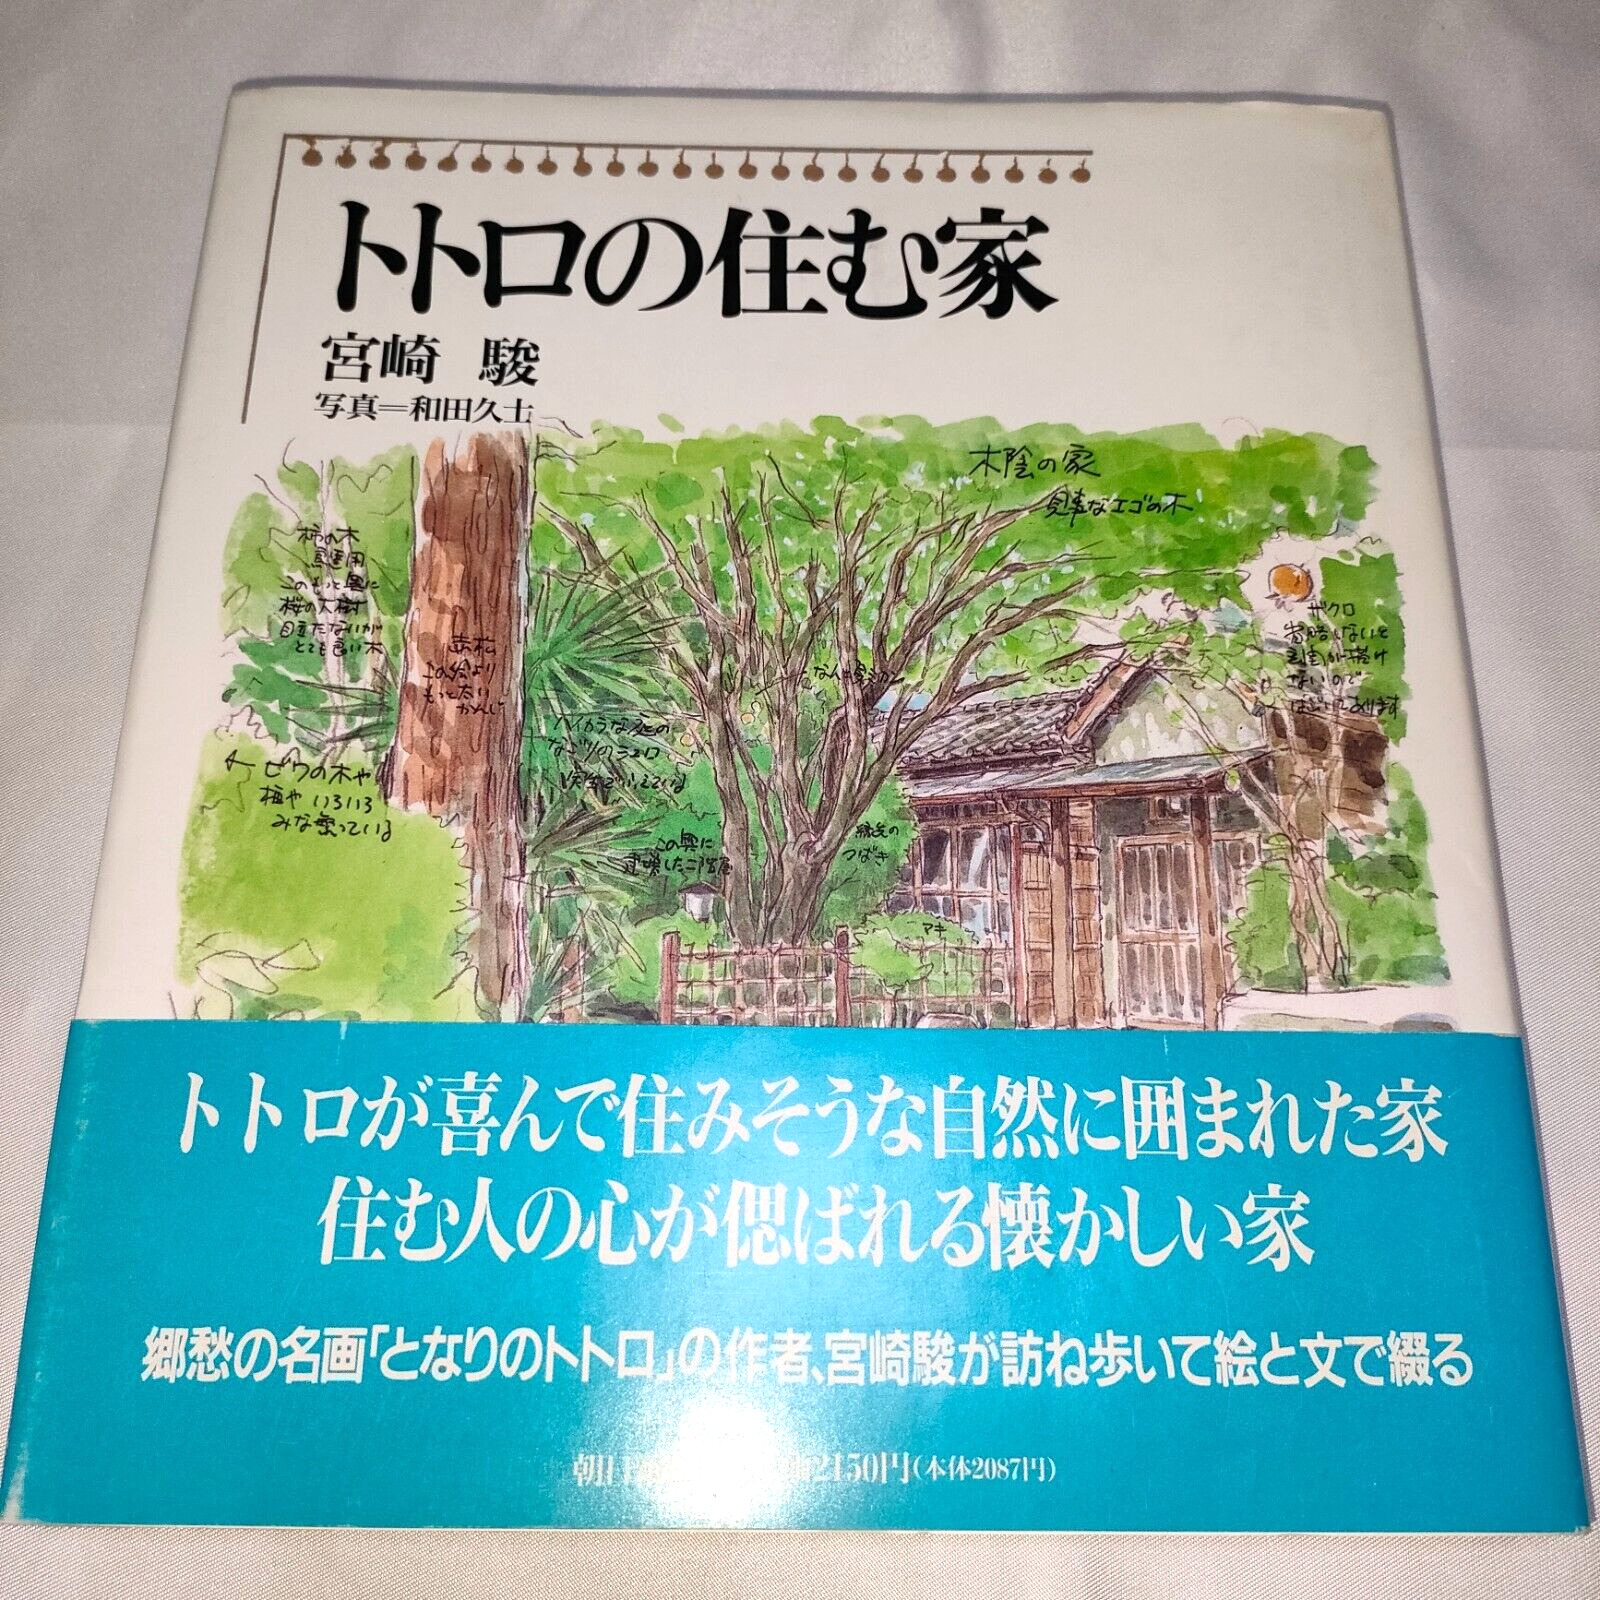 Ghibli Hayao Miyazaki Illustration Collection Art Book “Totoro’s House” Rare